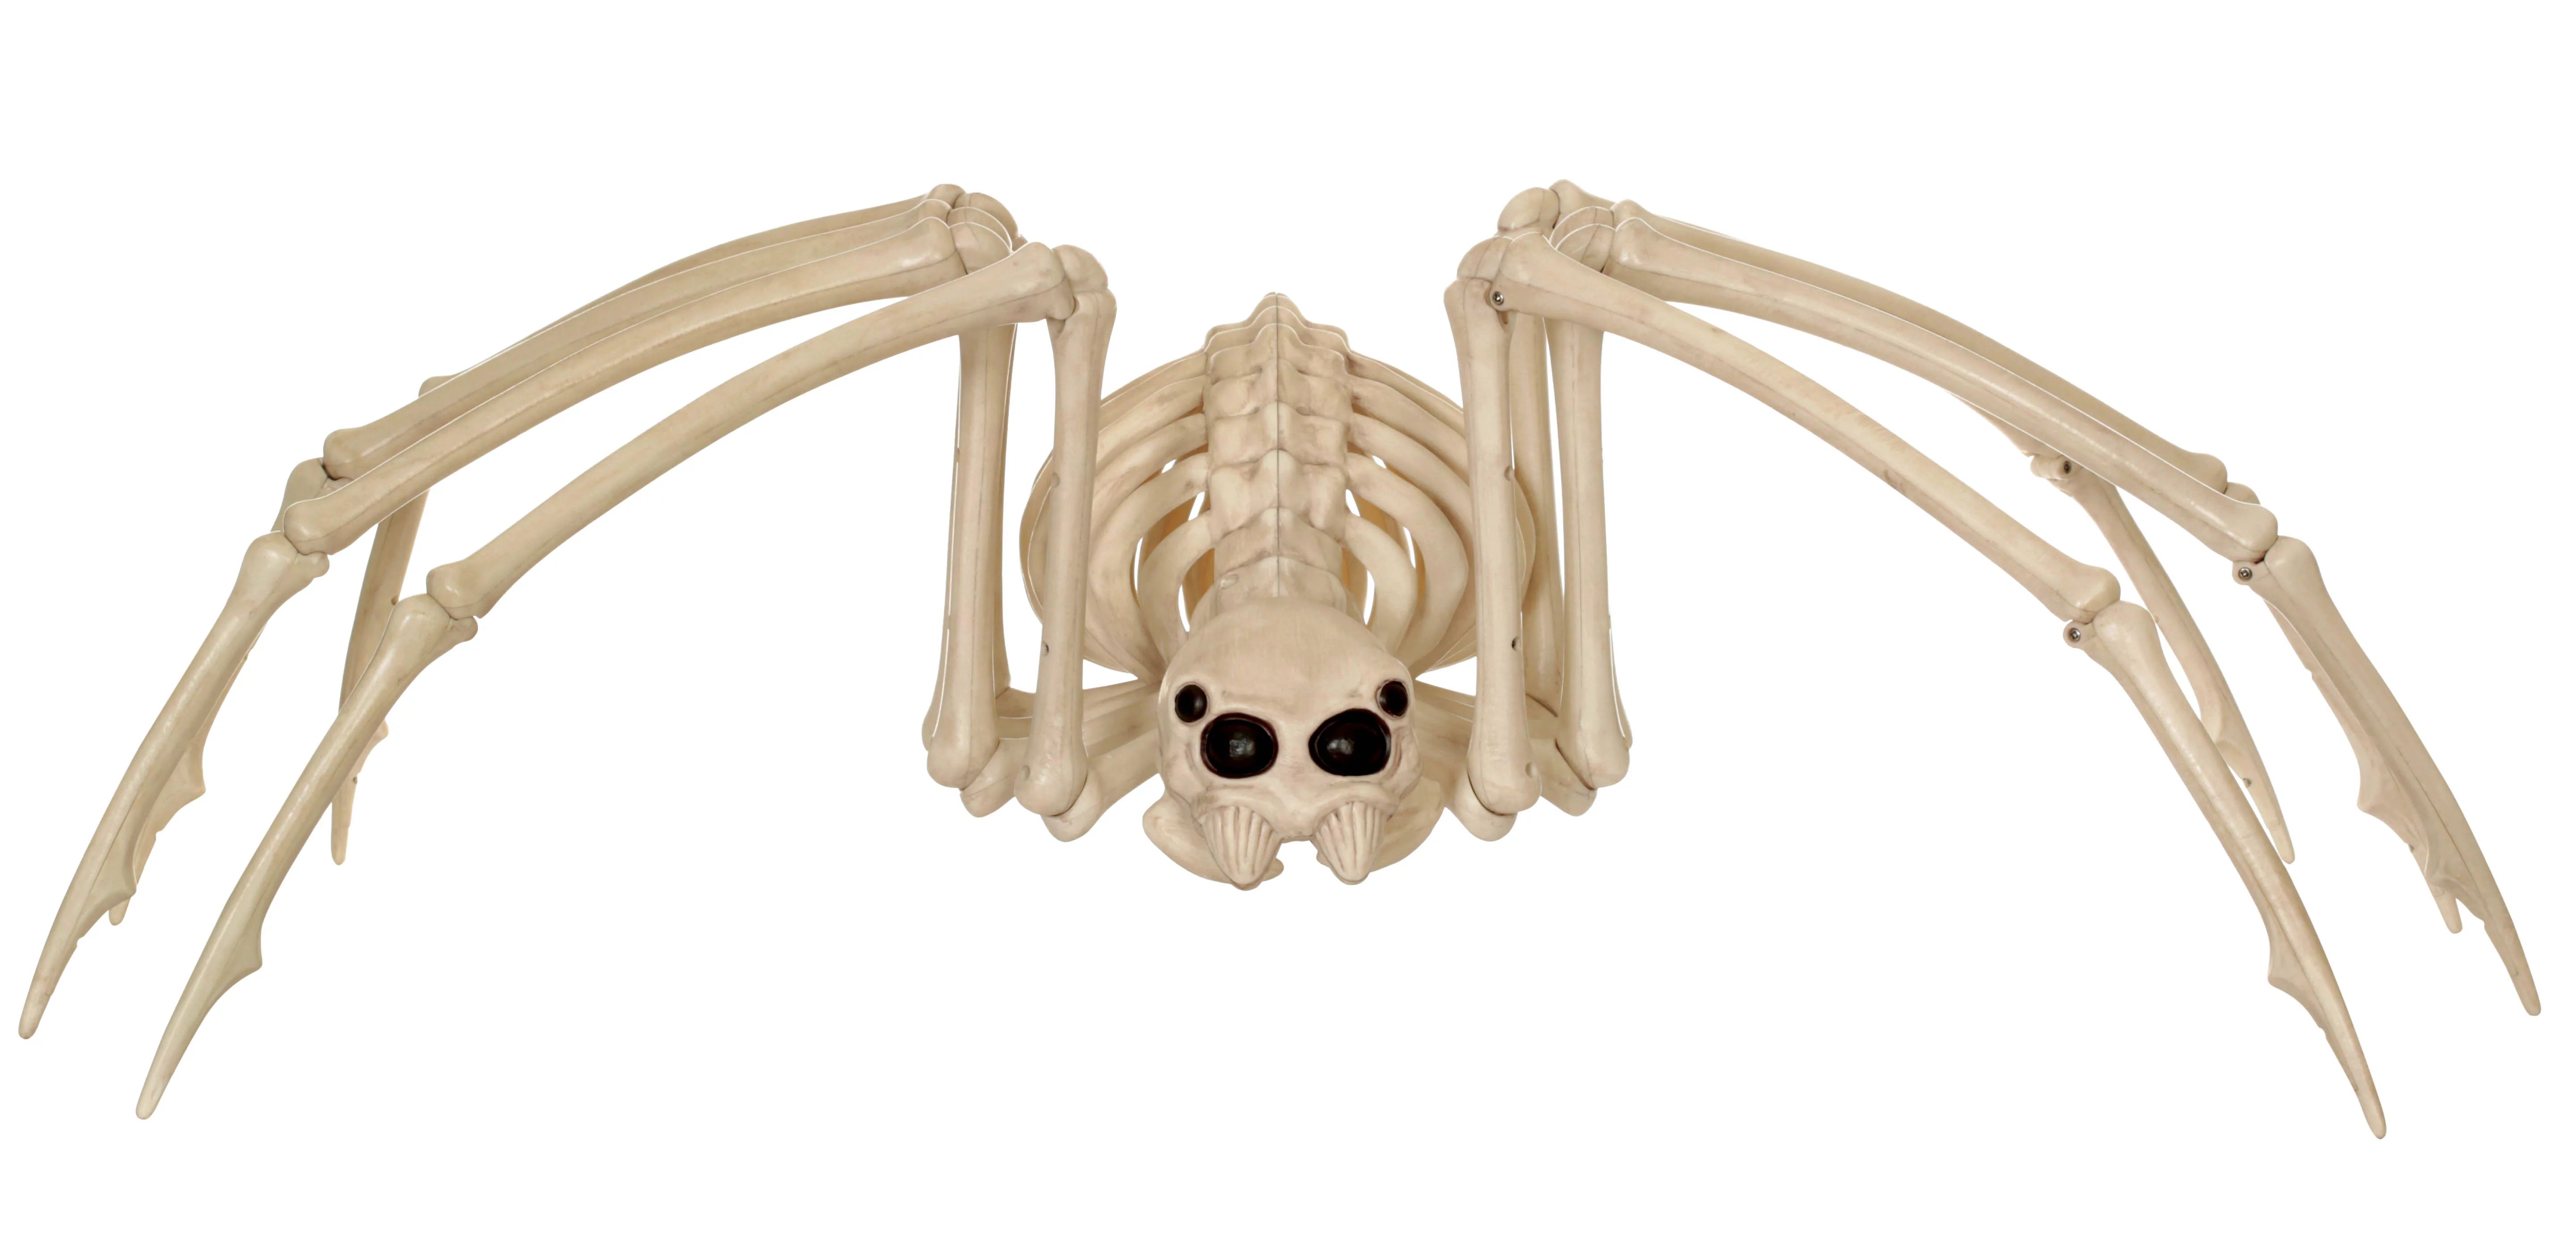 Way to Celebrate Skeleton Spider, Giant 40 Inch Posable Halloween Decoration | Walmart (US)